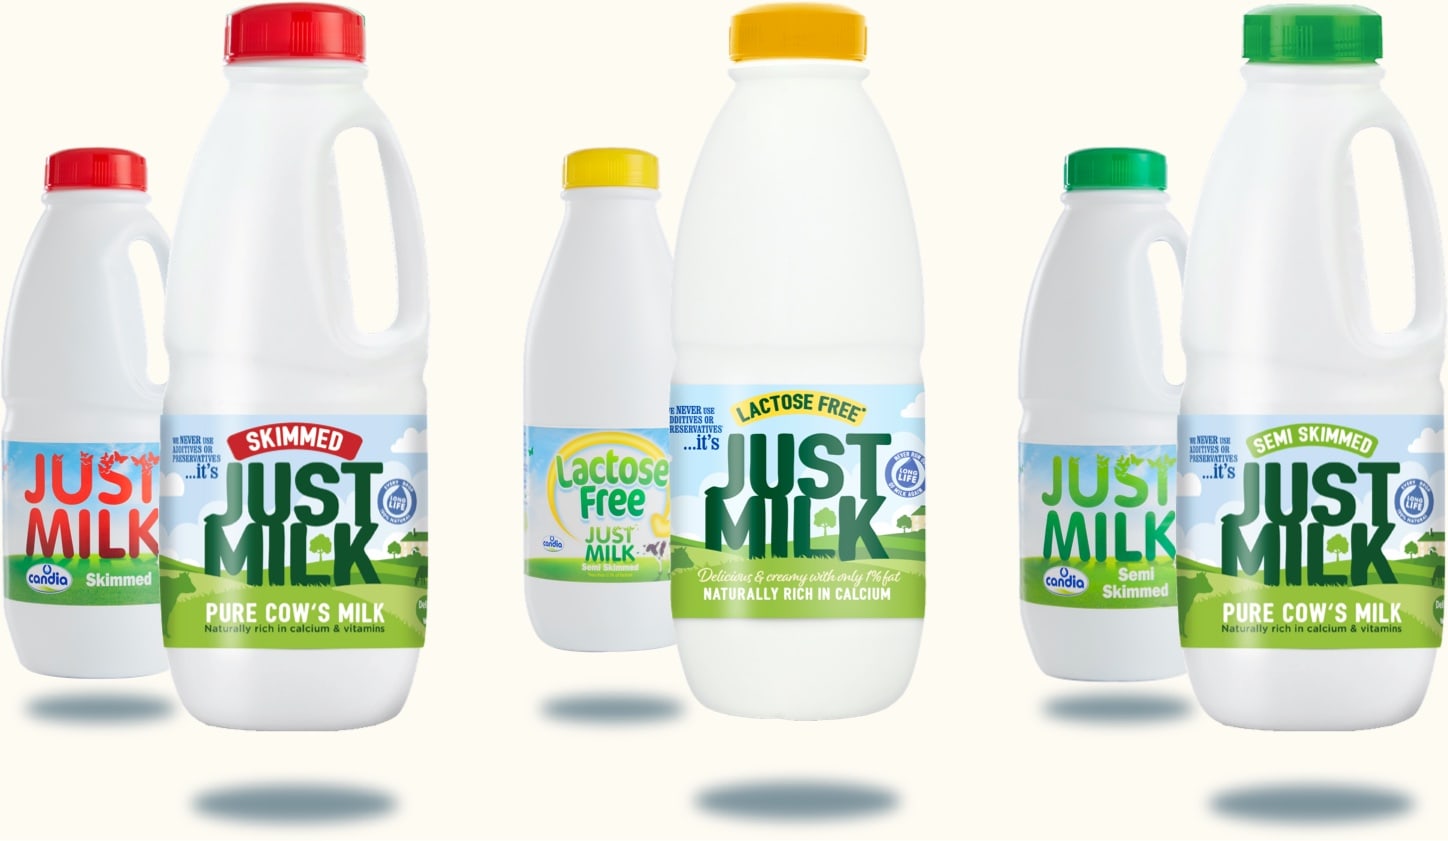 Milk - New JUST MILK packaging